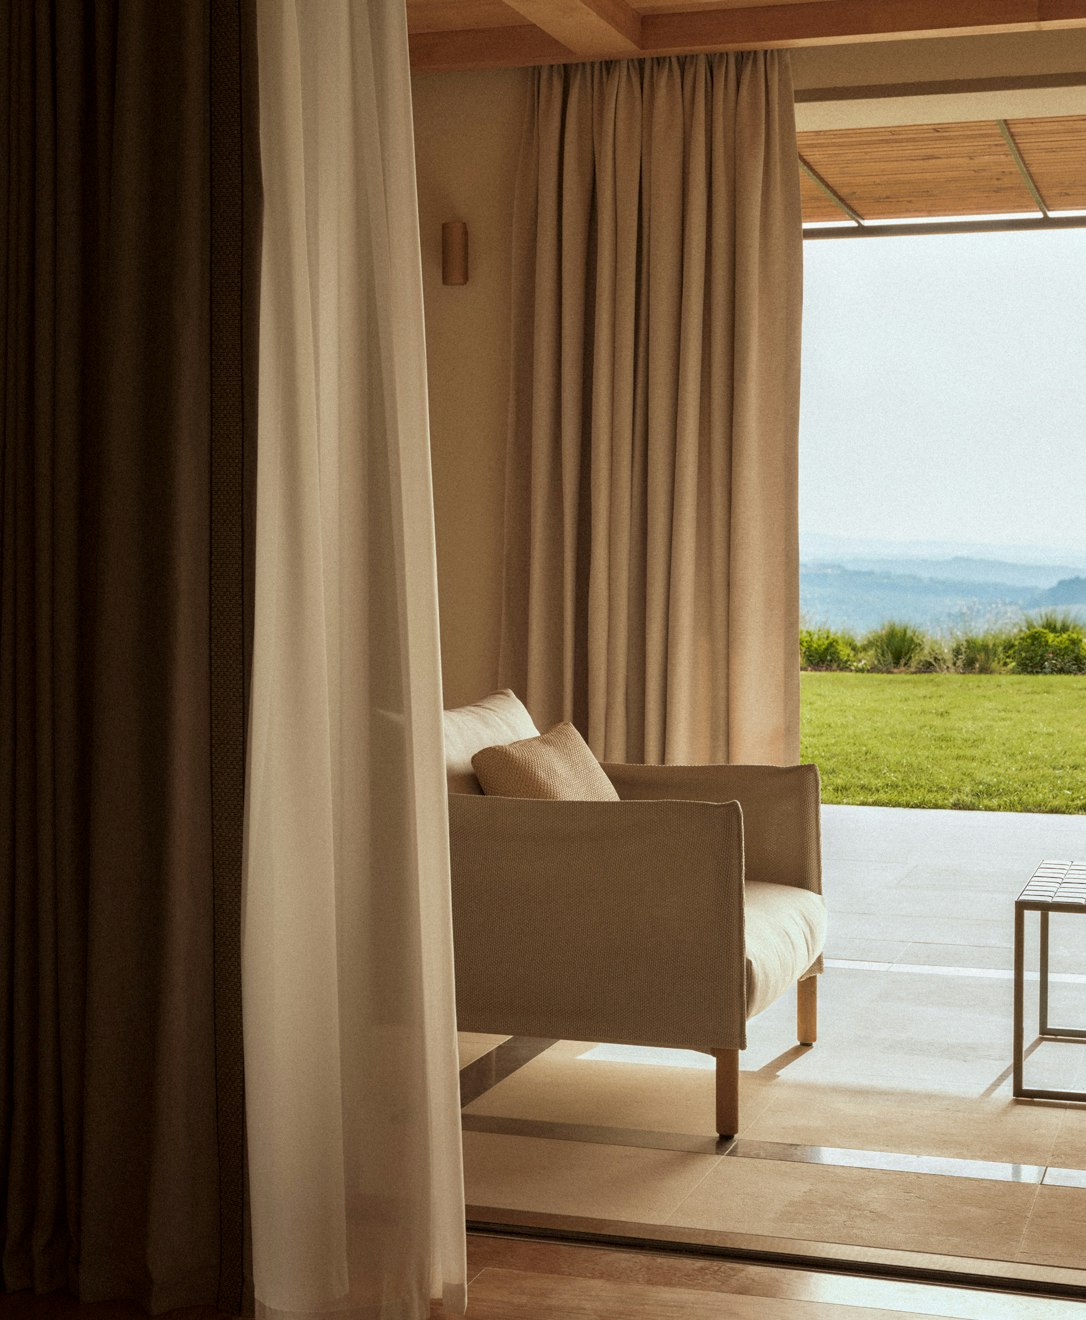 Luxury signature suite immersed in Tuscan nature at Castelfalfi